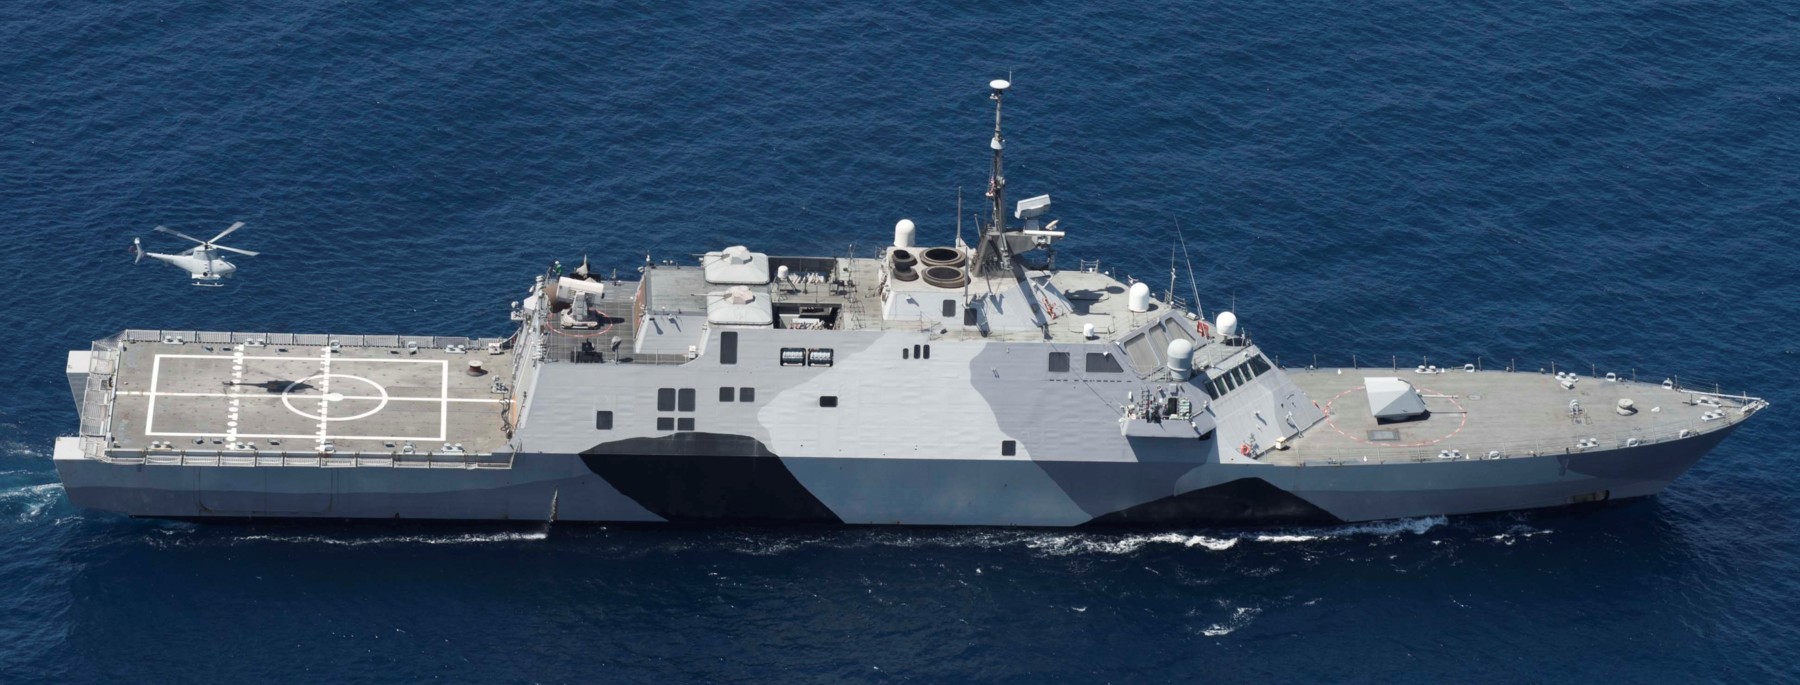 lcs-1 uss freedom class littoral combat ship us navy 08 mq-8b fire scout uav